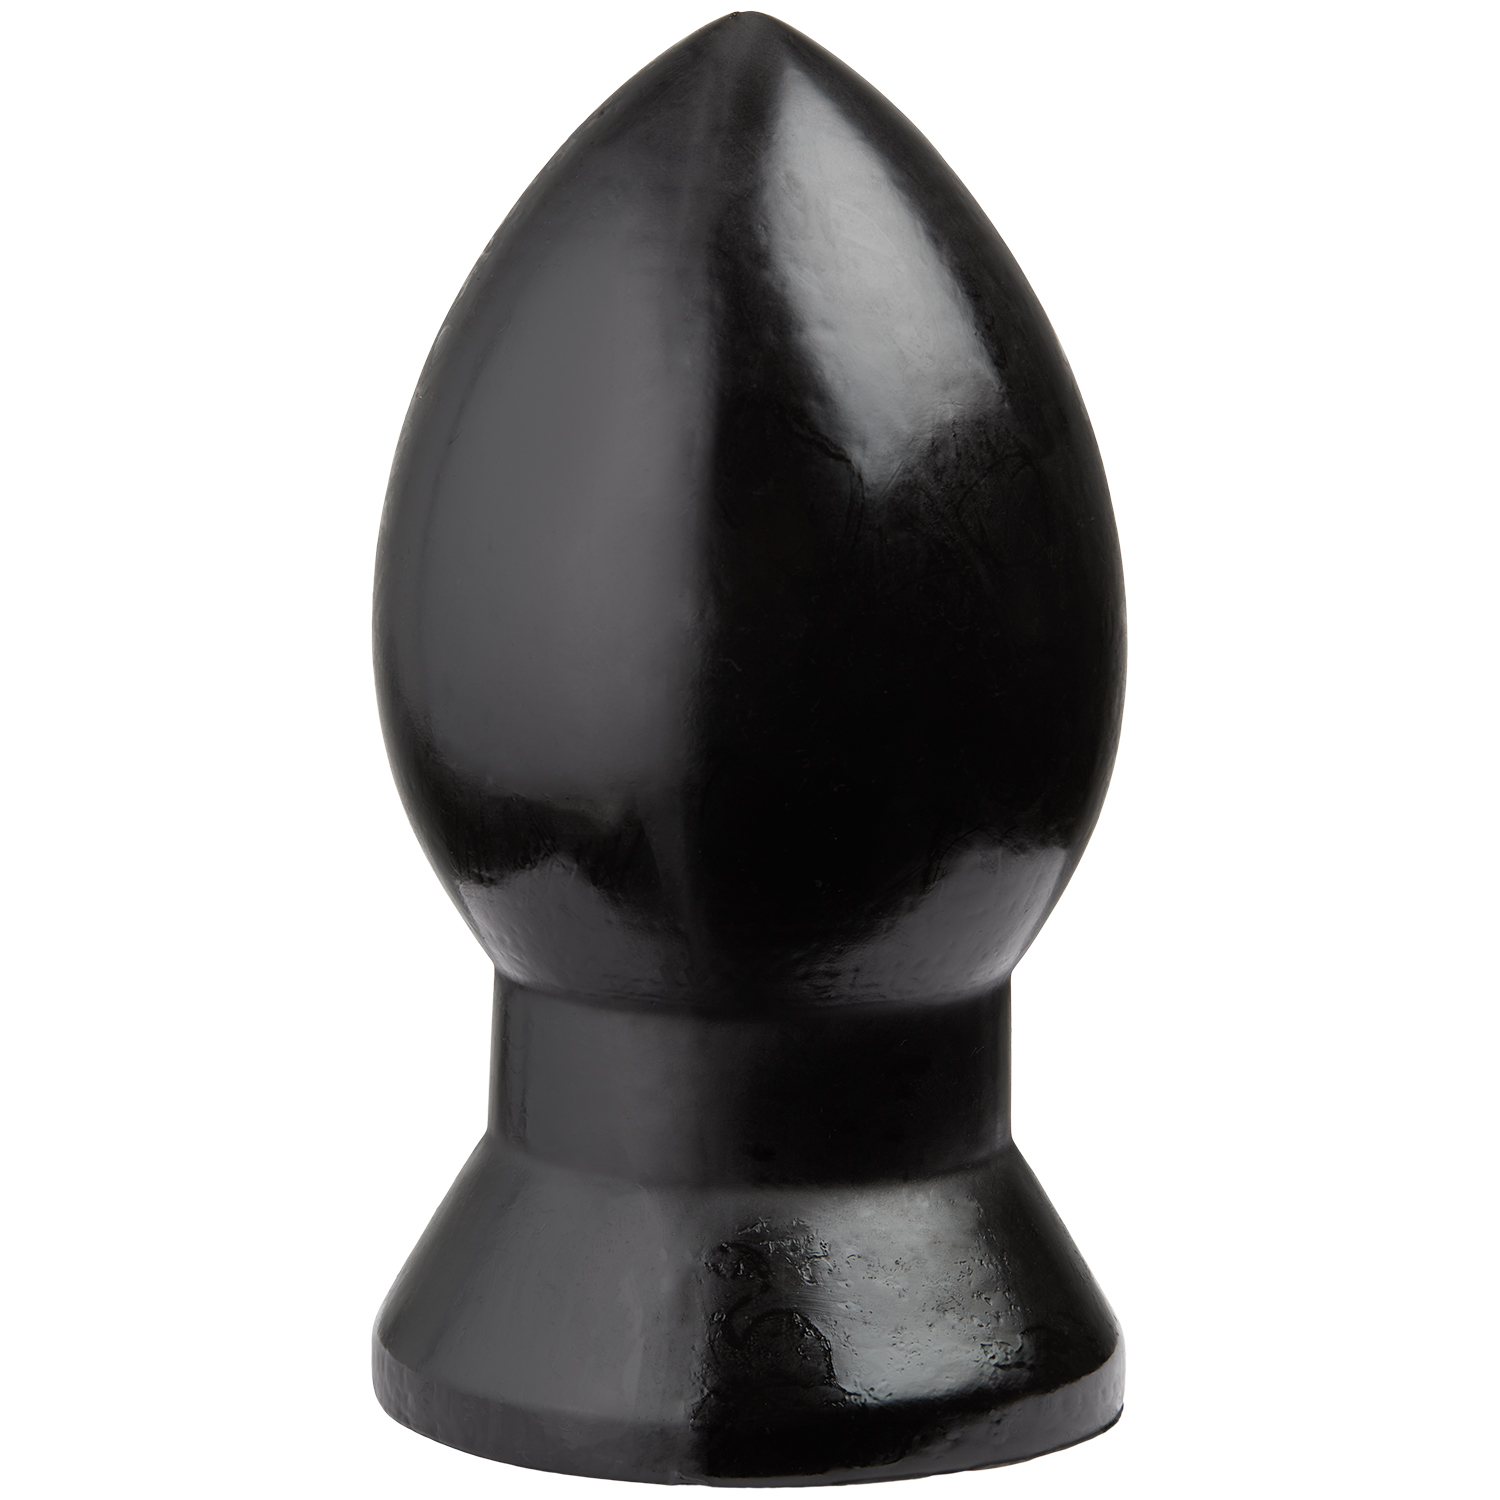 WAD Magical Orb Butt Plug Medium - Black